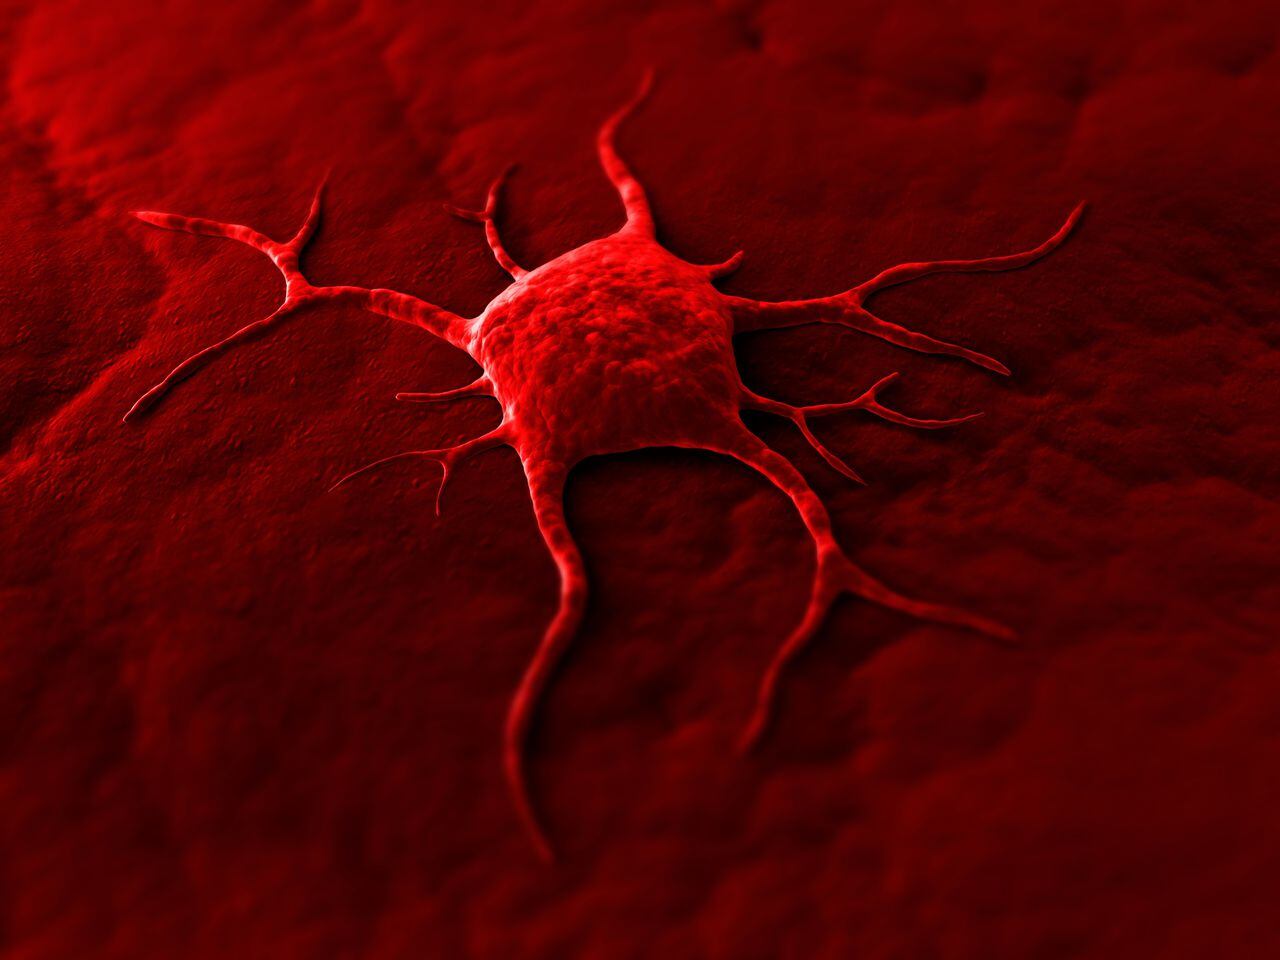 Célula Cancerígena en el cuerpo humana.